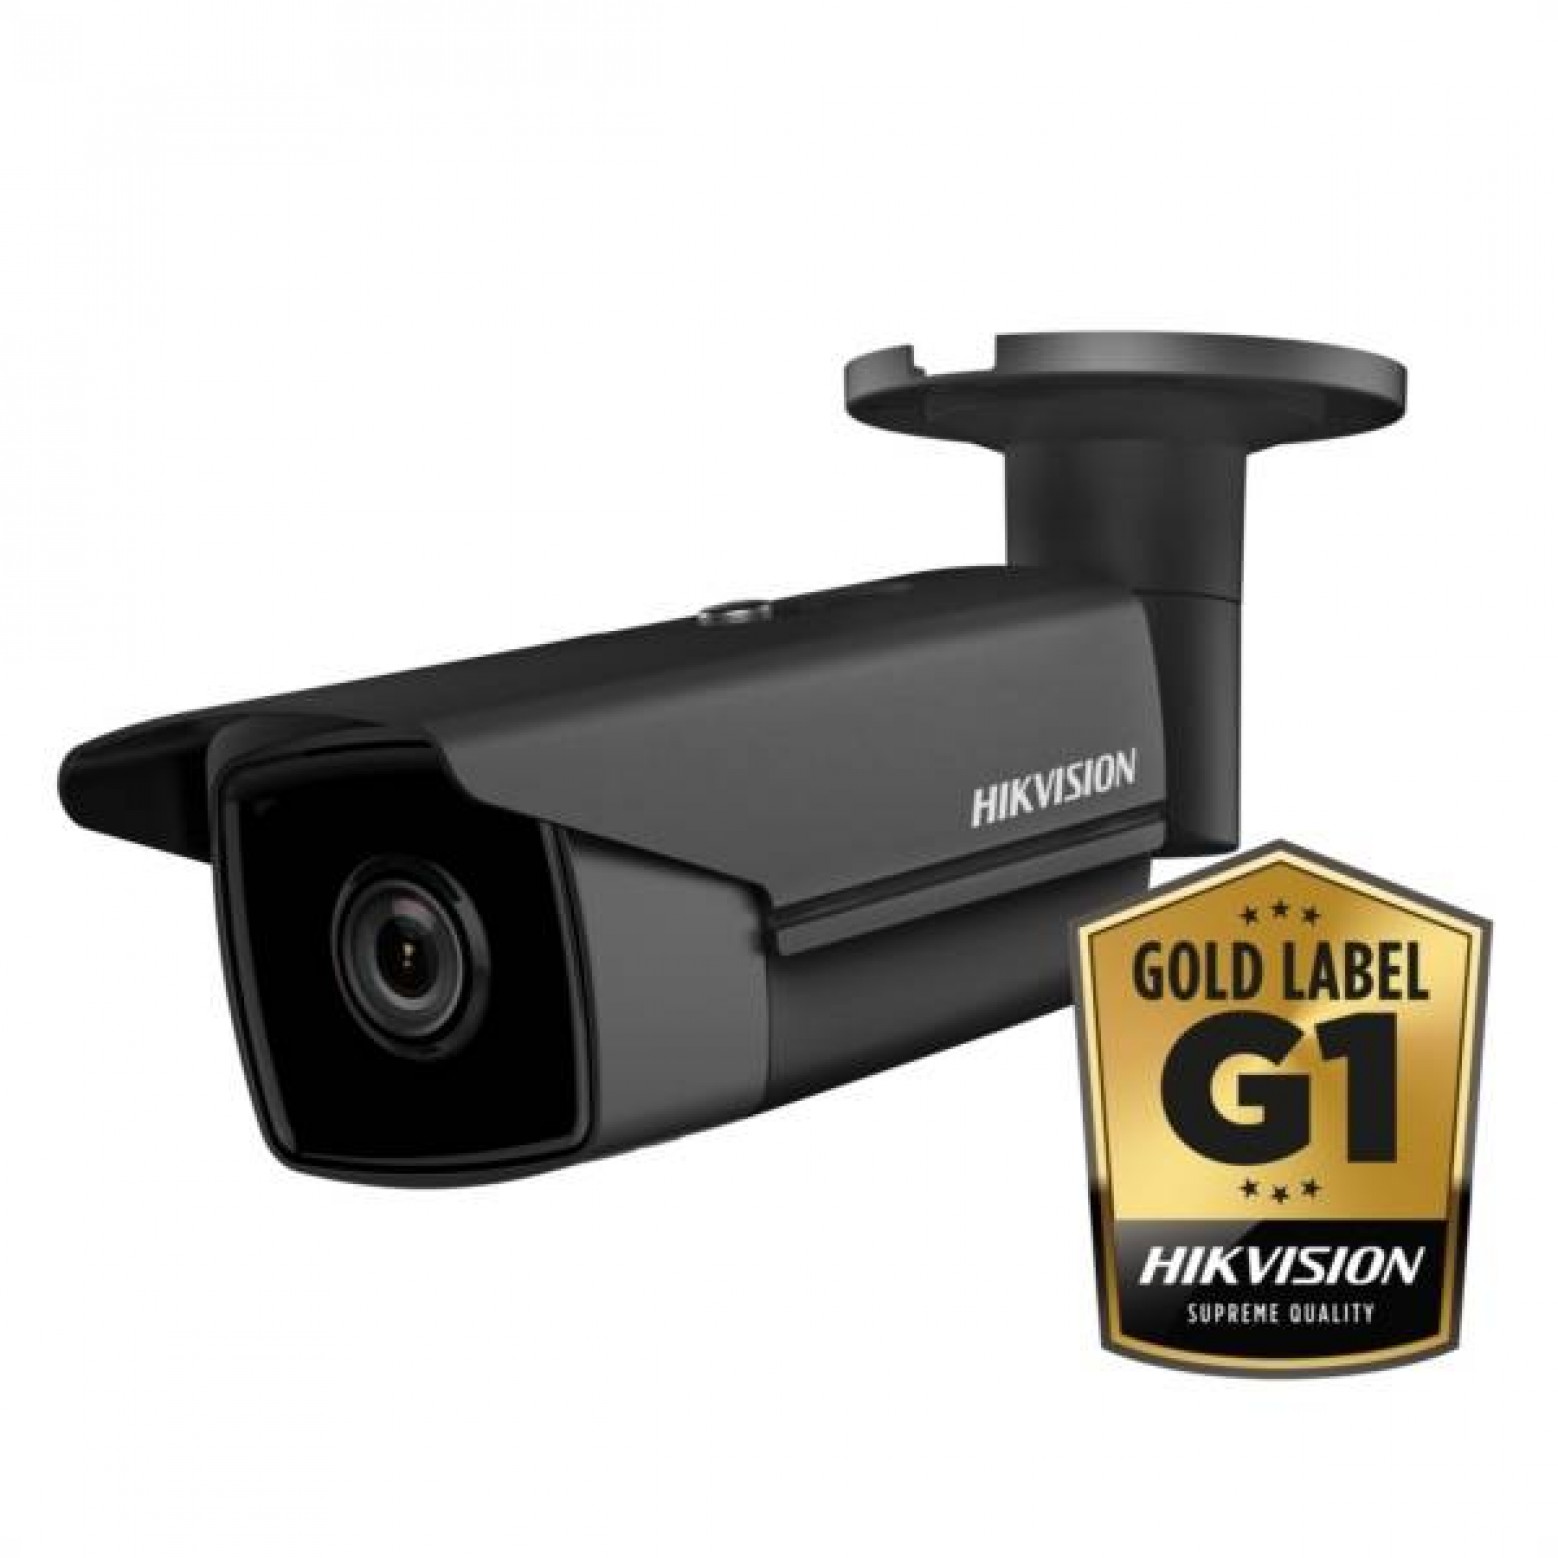 Hikvision DS-2CD2T35FWD-I5 Bullet Camera, Black Edition, 3MP, 50m IR, WDR, Ultra Low Light